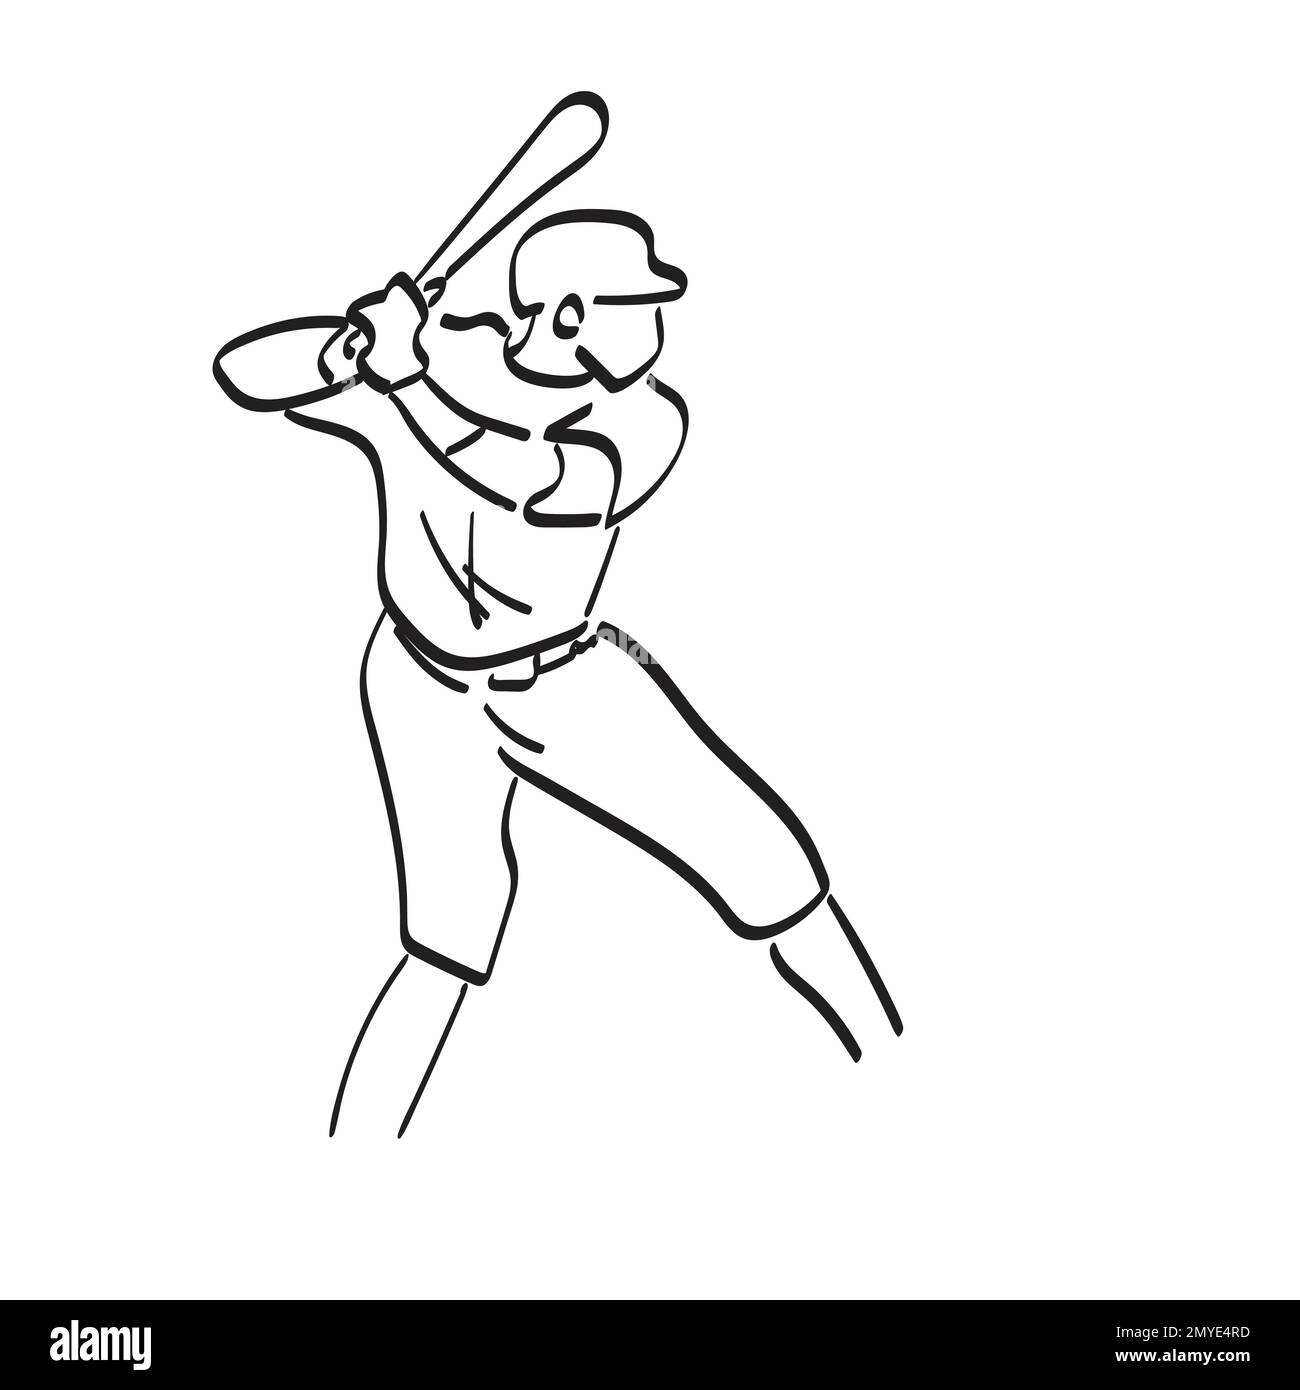 line art baseball player illustration vector hand drawn isolated on ...